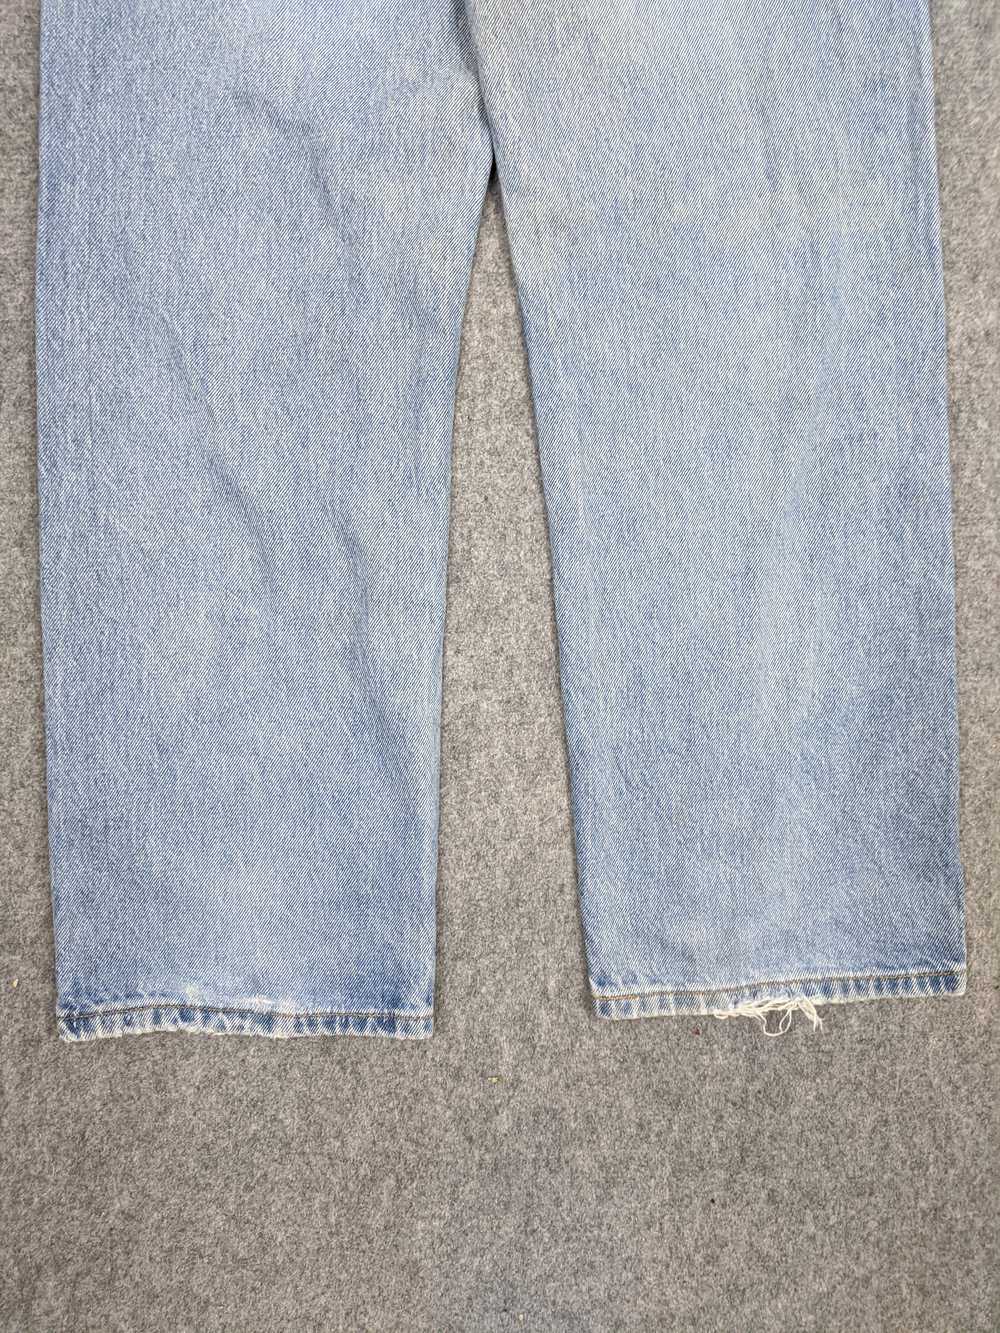 Vintage - Vintage Levis 569 Jeans - image 11